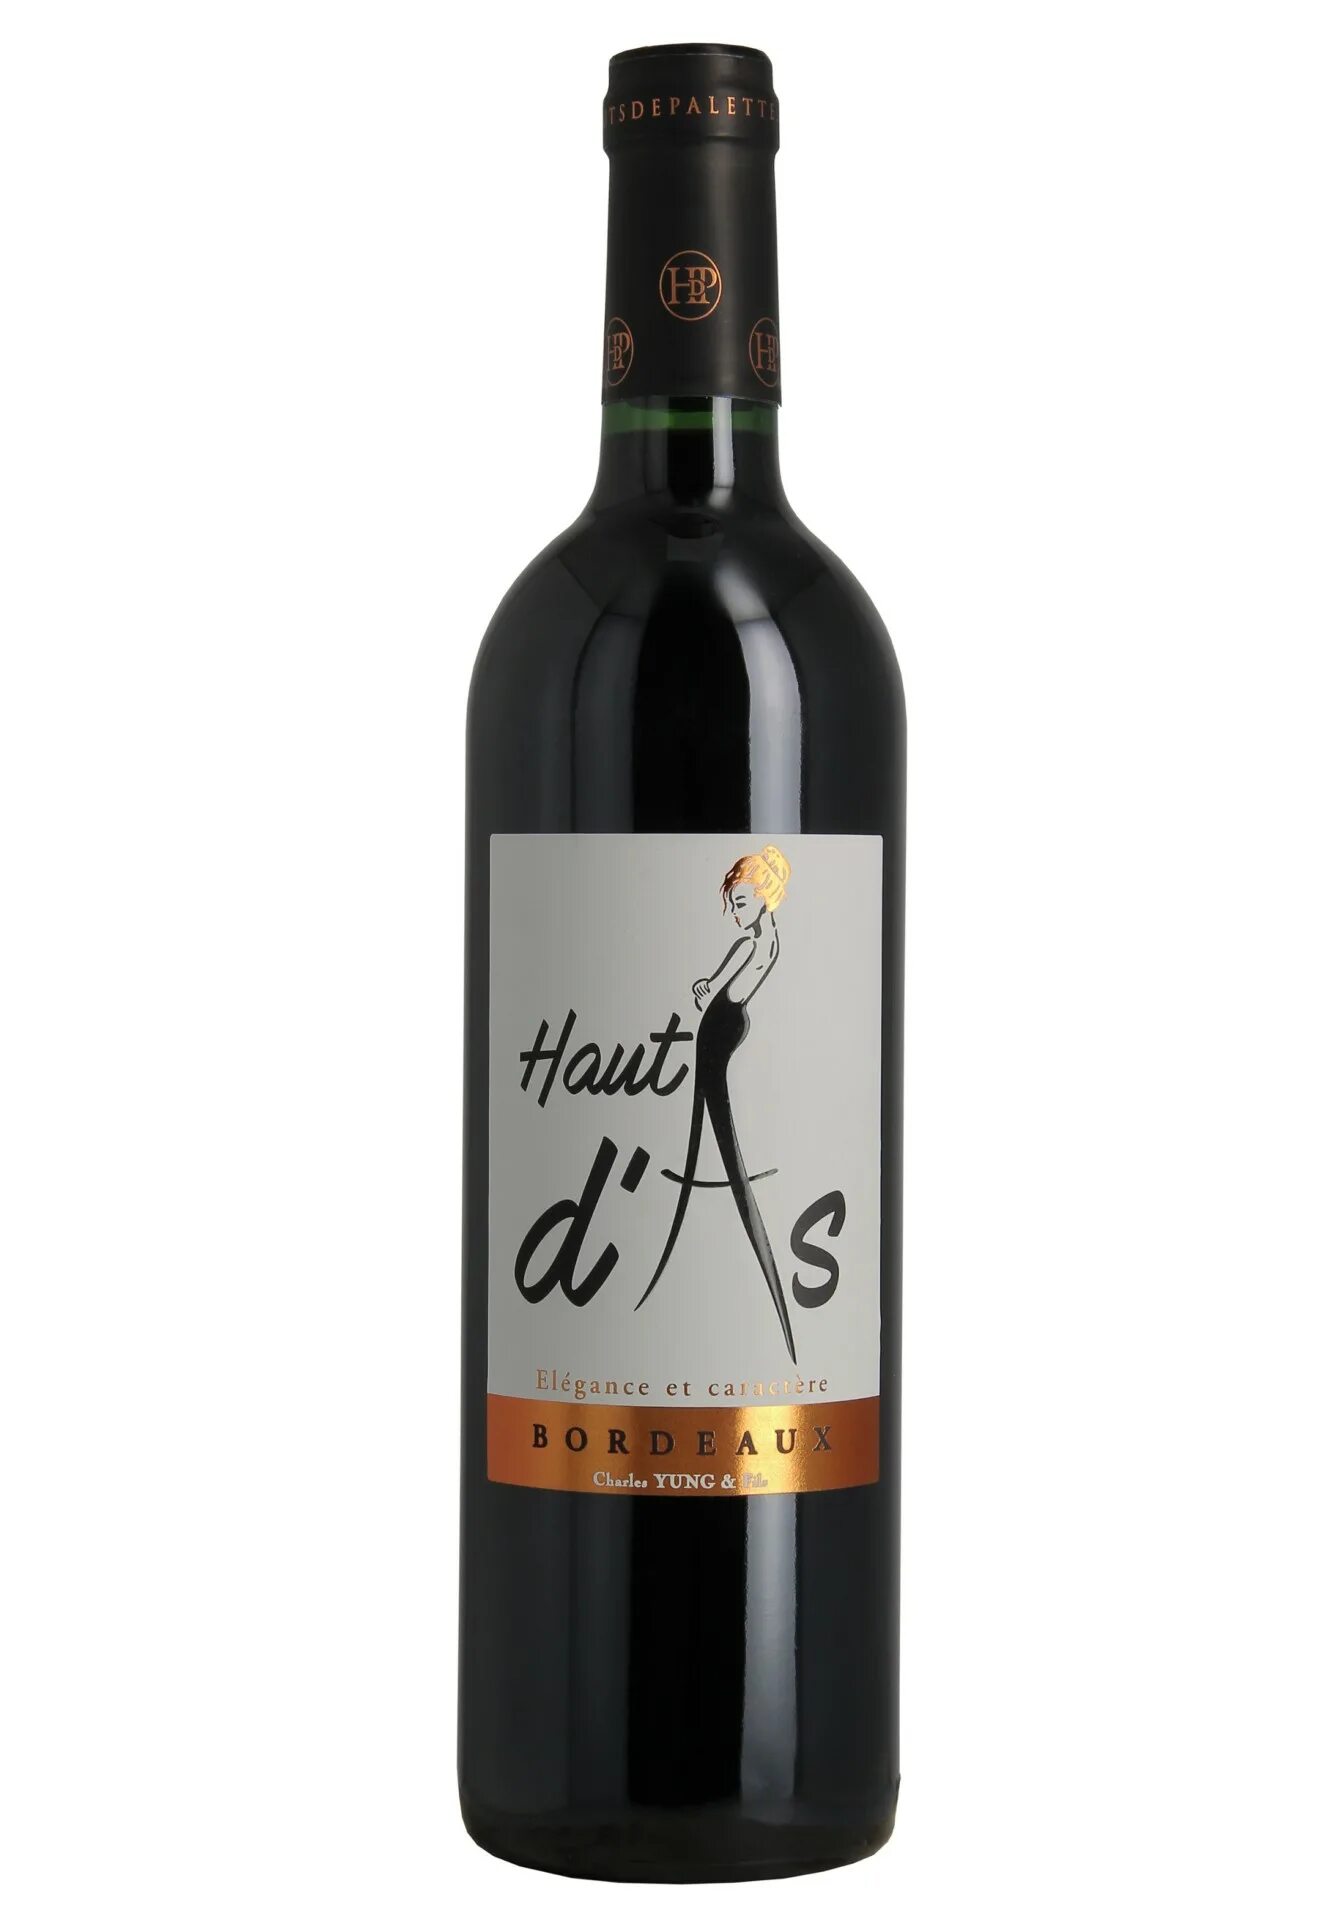 Вино "Hauts de Meynac" Blanc, Graves AOC. Шато о Мондэн. Duc d'Epernon вино. Вино АС.